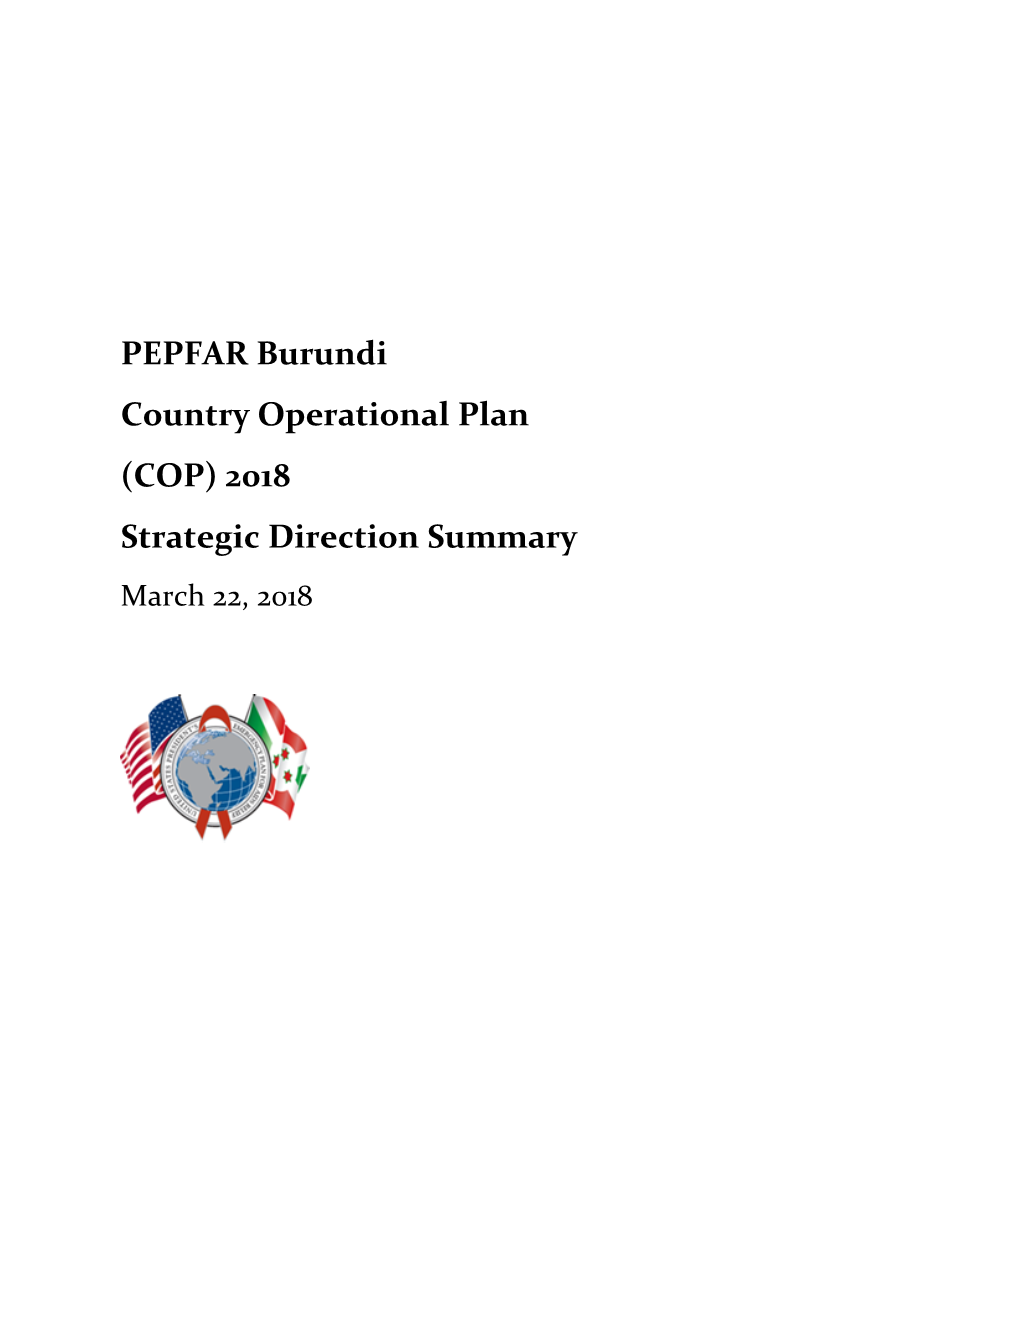 Burundi Country Operational Plan (COP) 2018 Strategic Direction Summary March 22, 2018